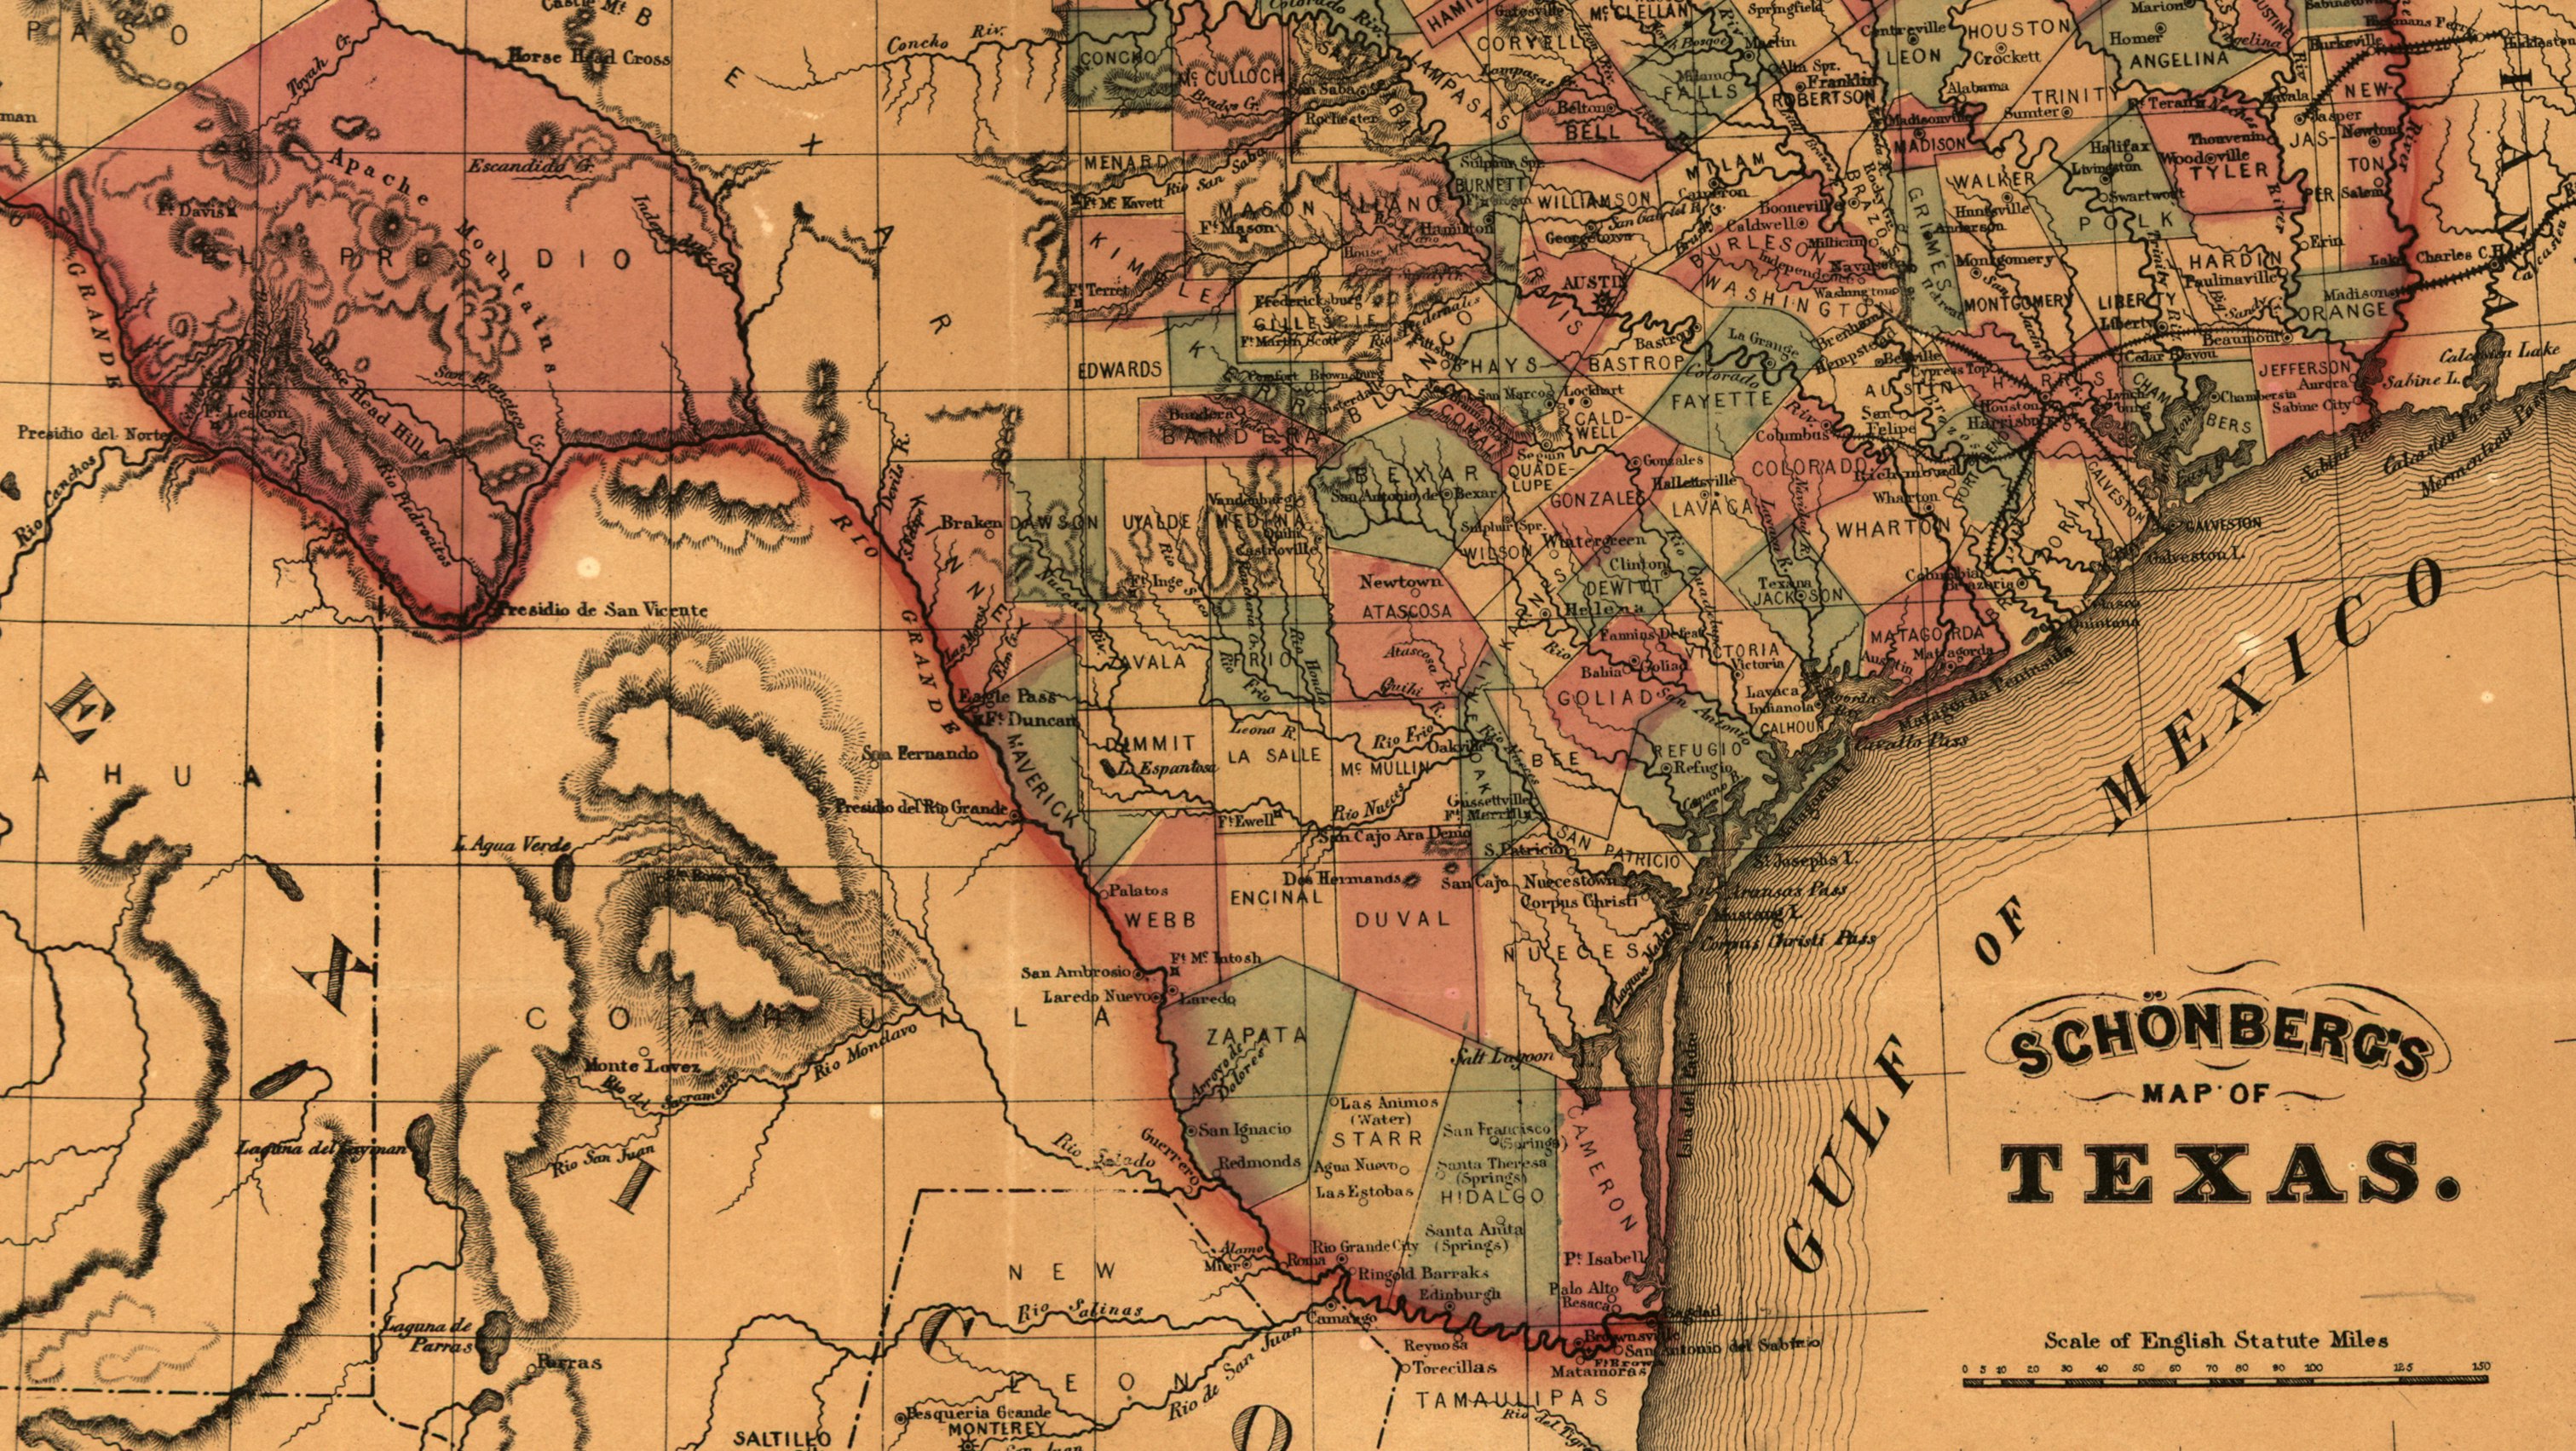 Schönberg’s map of Texas, 1866. Courtesy Library of Congress.